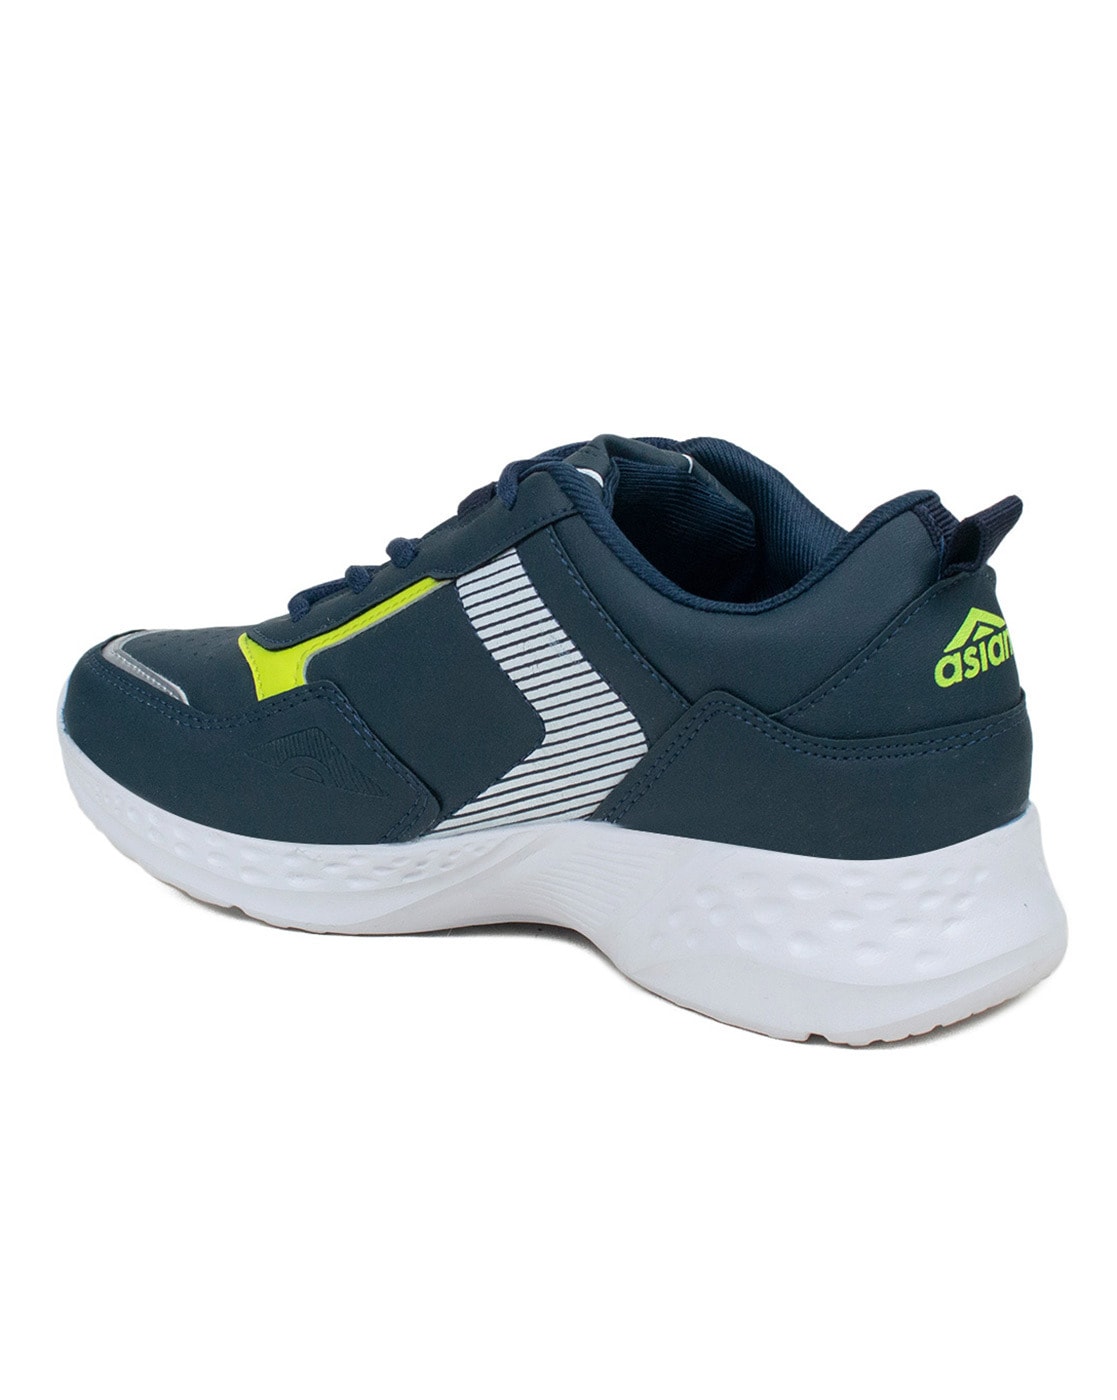 GOLDSTAR G10 Running Shoes For Men  Buy Black Color GOLDSTAR G10 Running  Shoes For Men Online at Best Price  Shop Online for Footwears in India   Flipkartcom